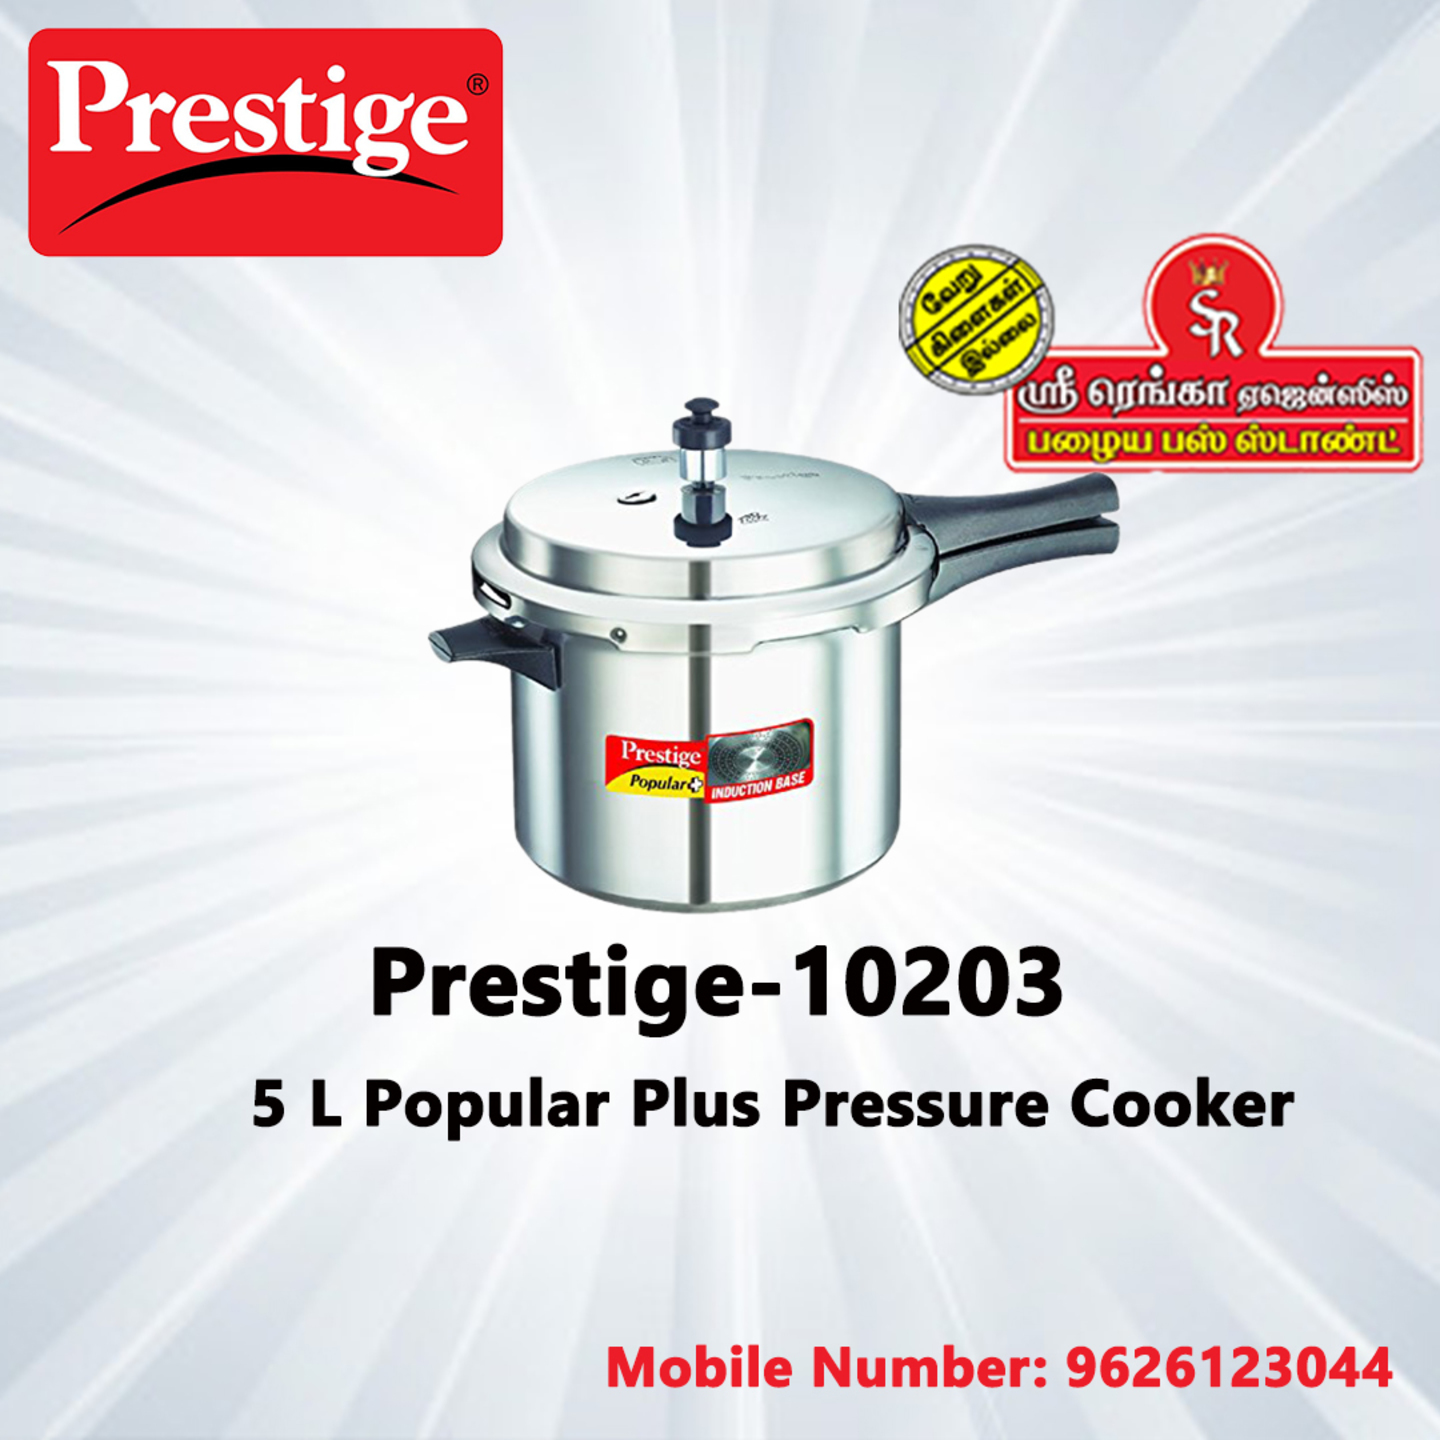 Prestige Popular Plus Induction Base Aluminium Pressure Cooker, 5 Litres, Silver